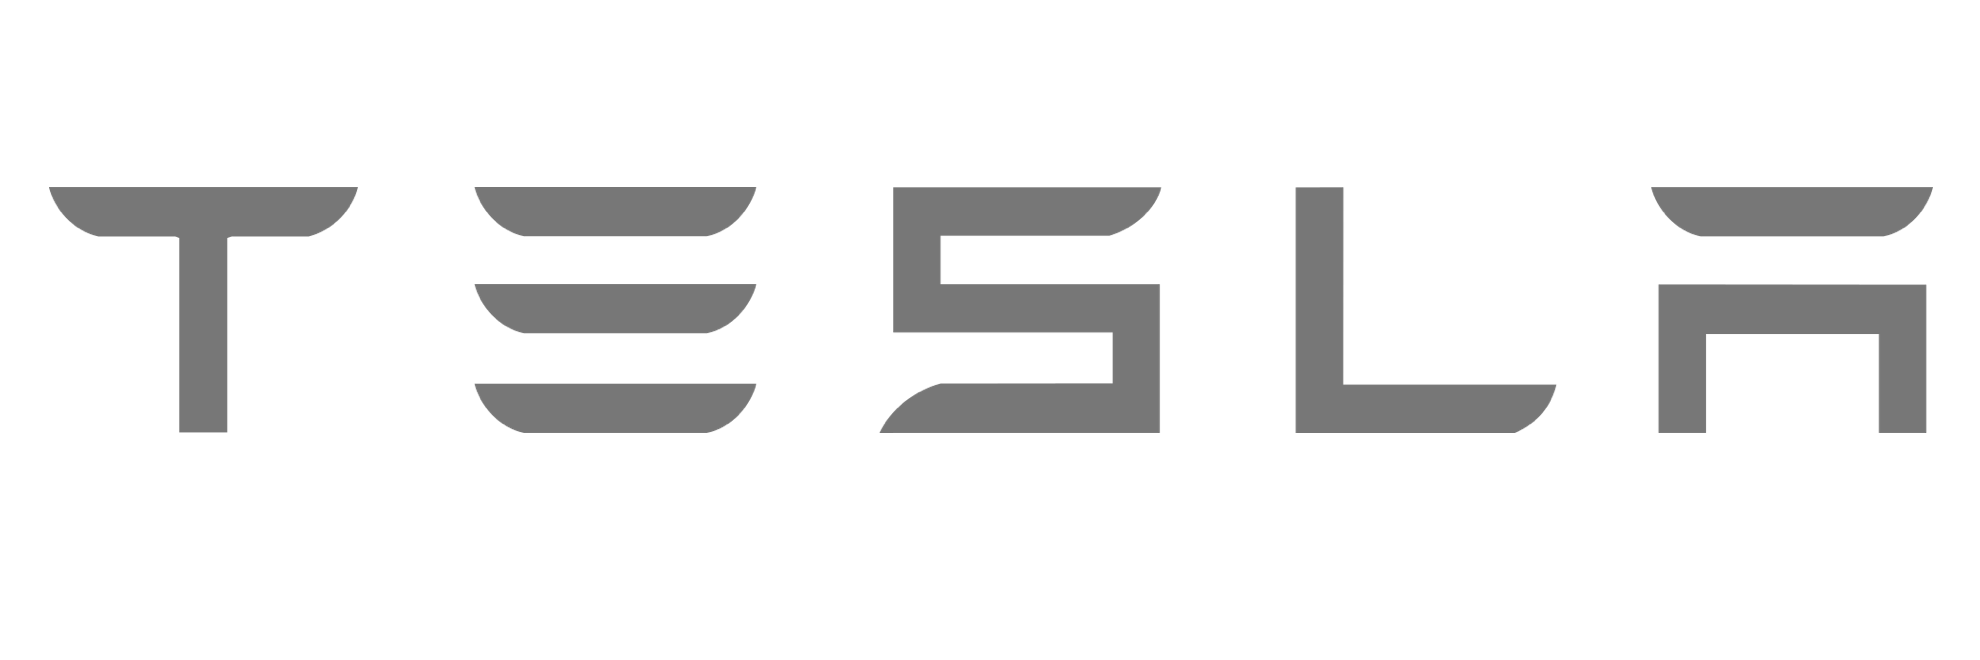 Tesla Car Motors Cars Brands Logo Model Clipart